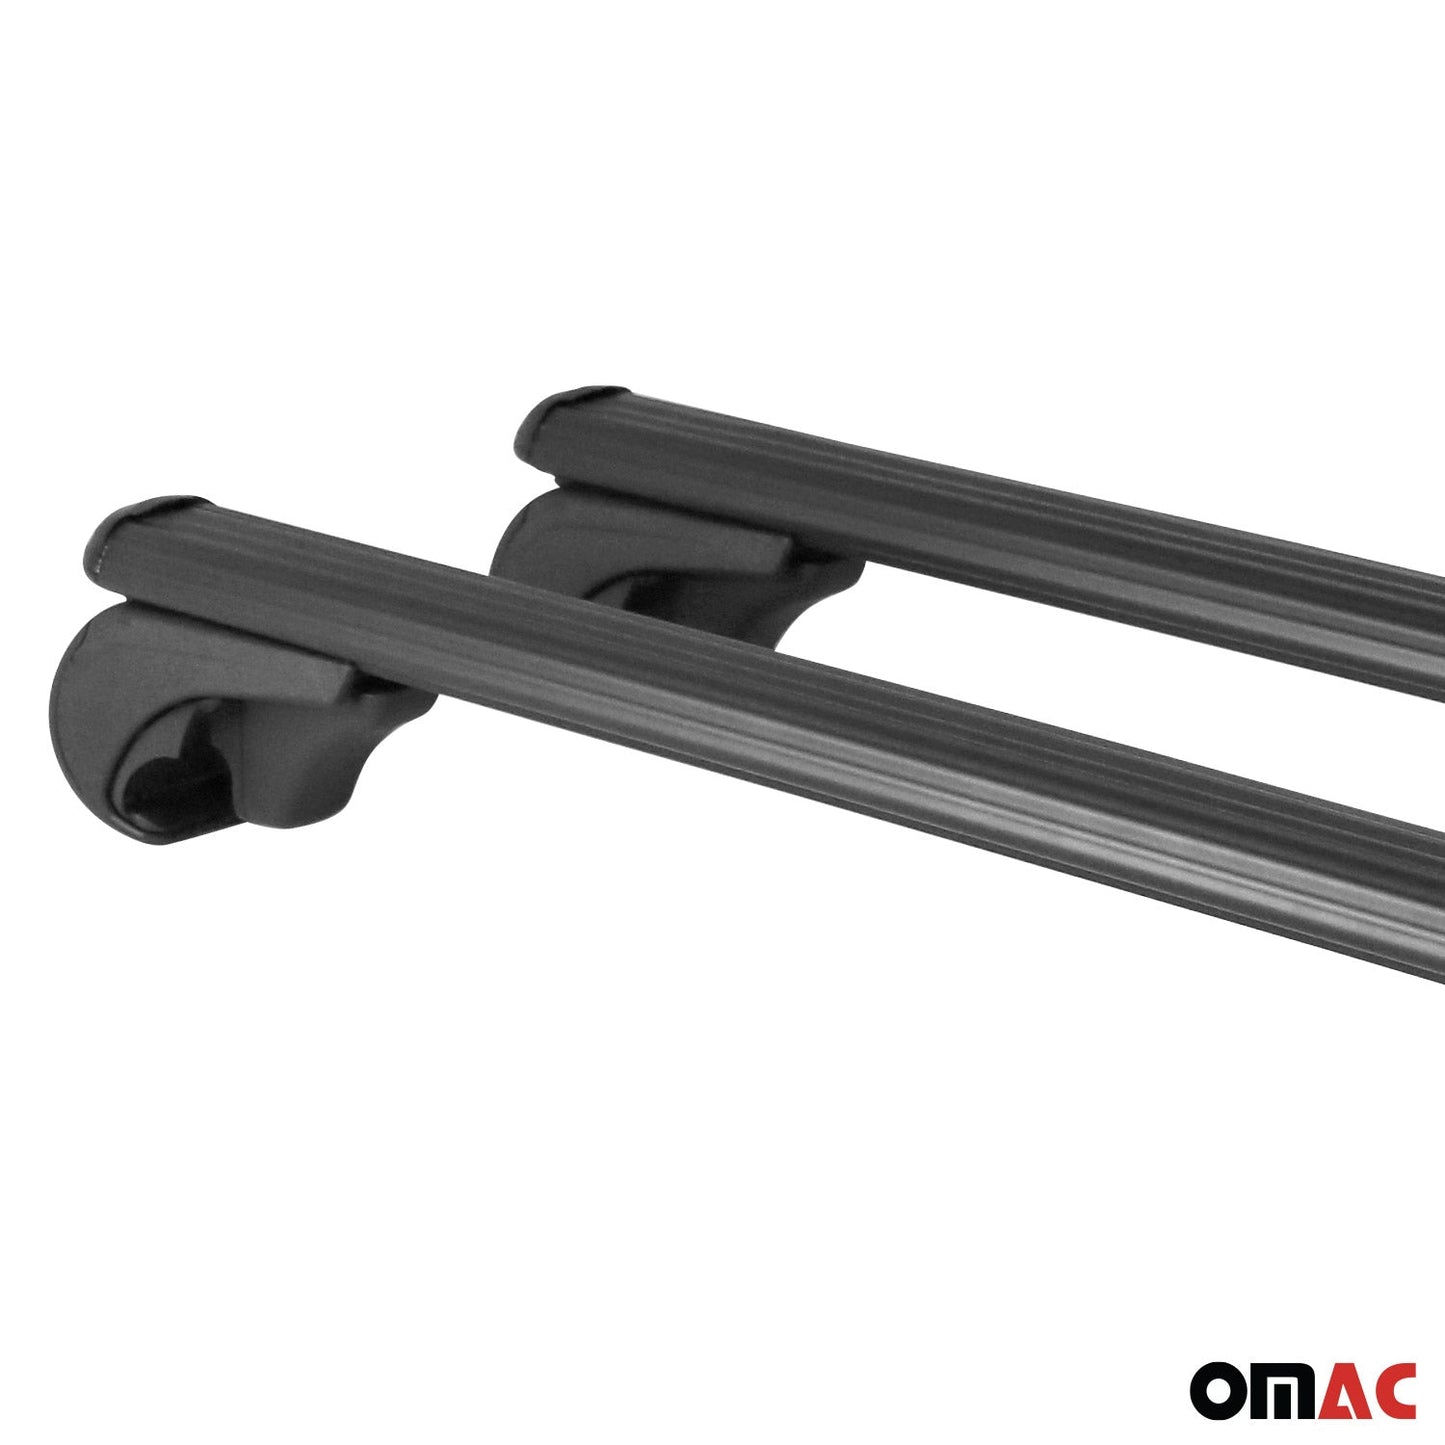 OMAC Lockable Roof Rack Cross Bars Luggage Carrier for Acura RDX 2007-2018 Black 2Pcs 10019696929LB